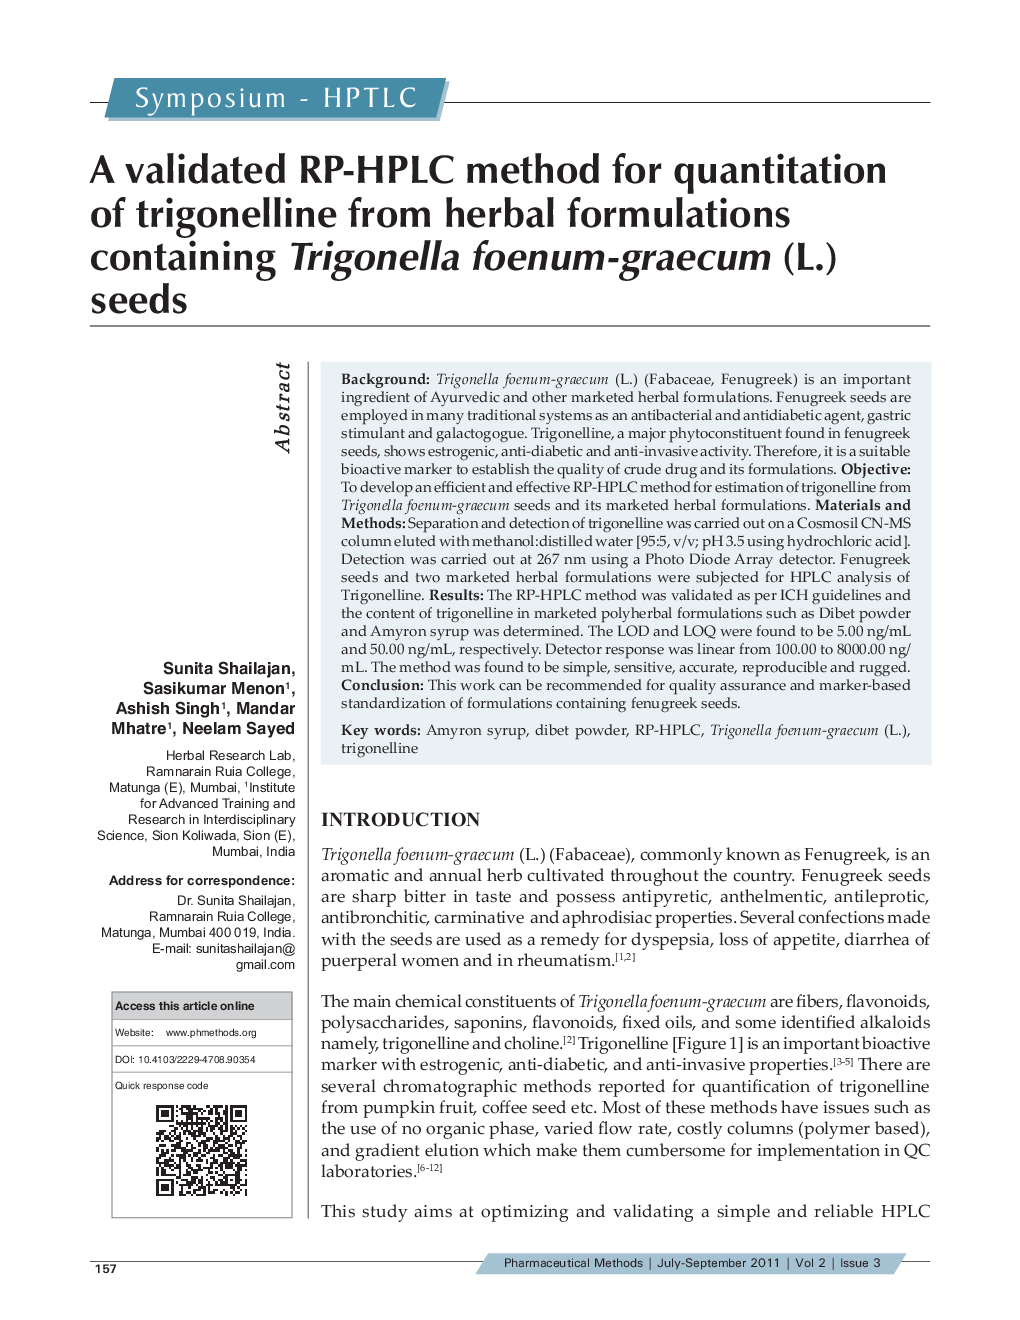 A validated RP-HPLC method for quantitation of trigonelline from herbal formulations containing Trigonella foenum-graecum (L.) seeds